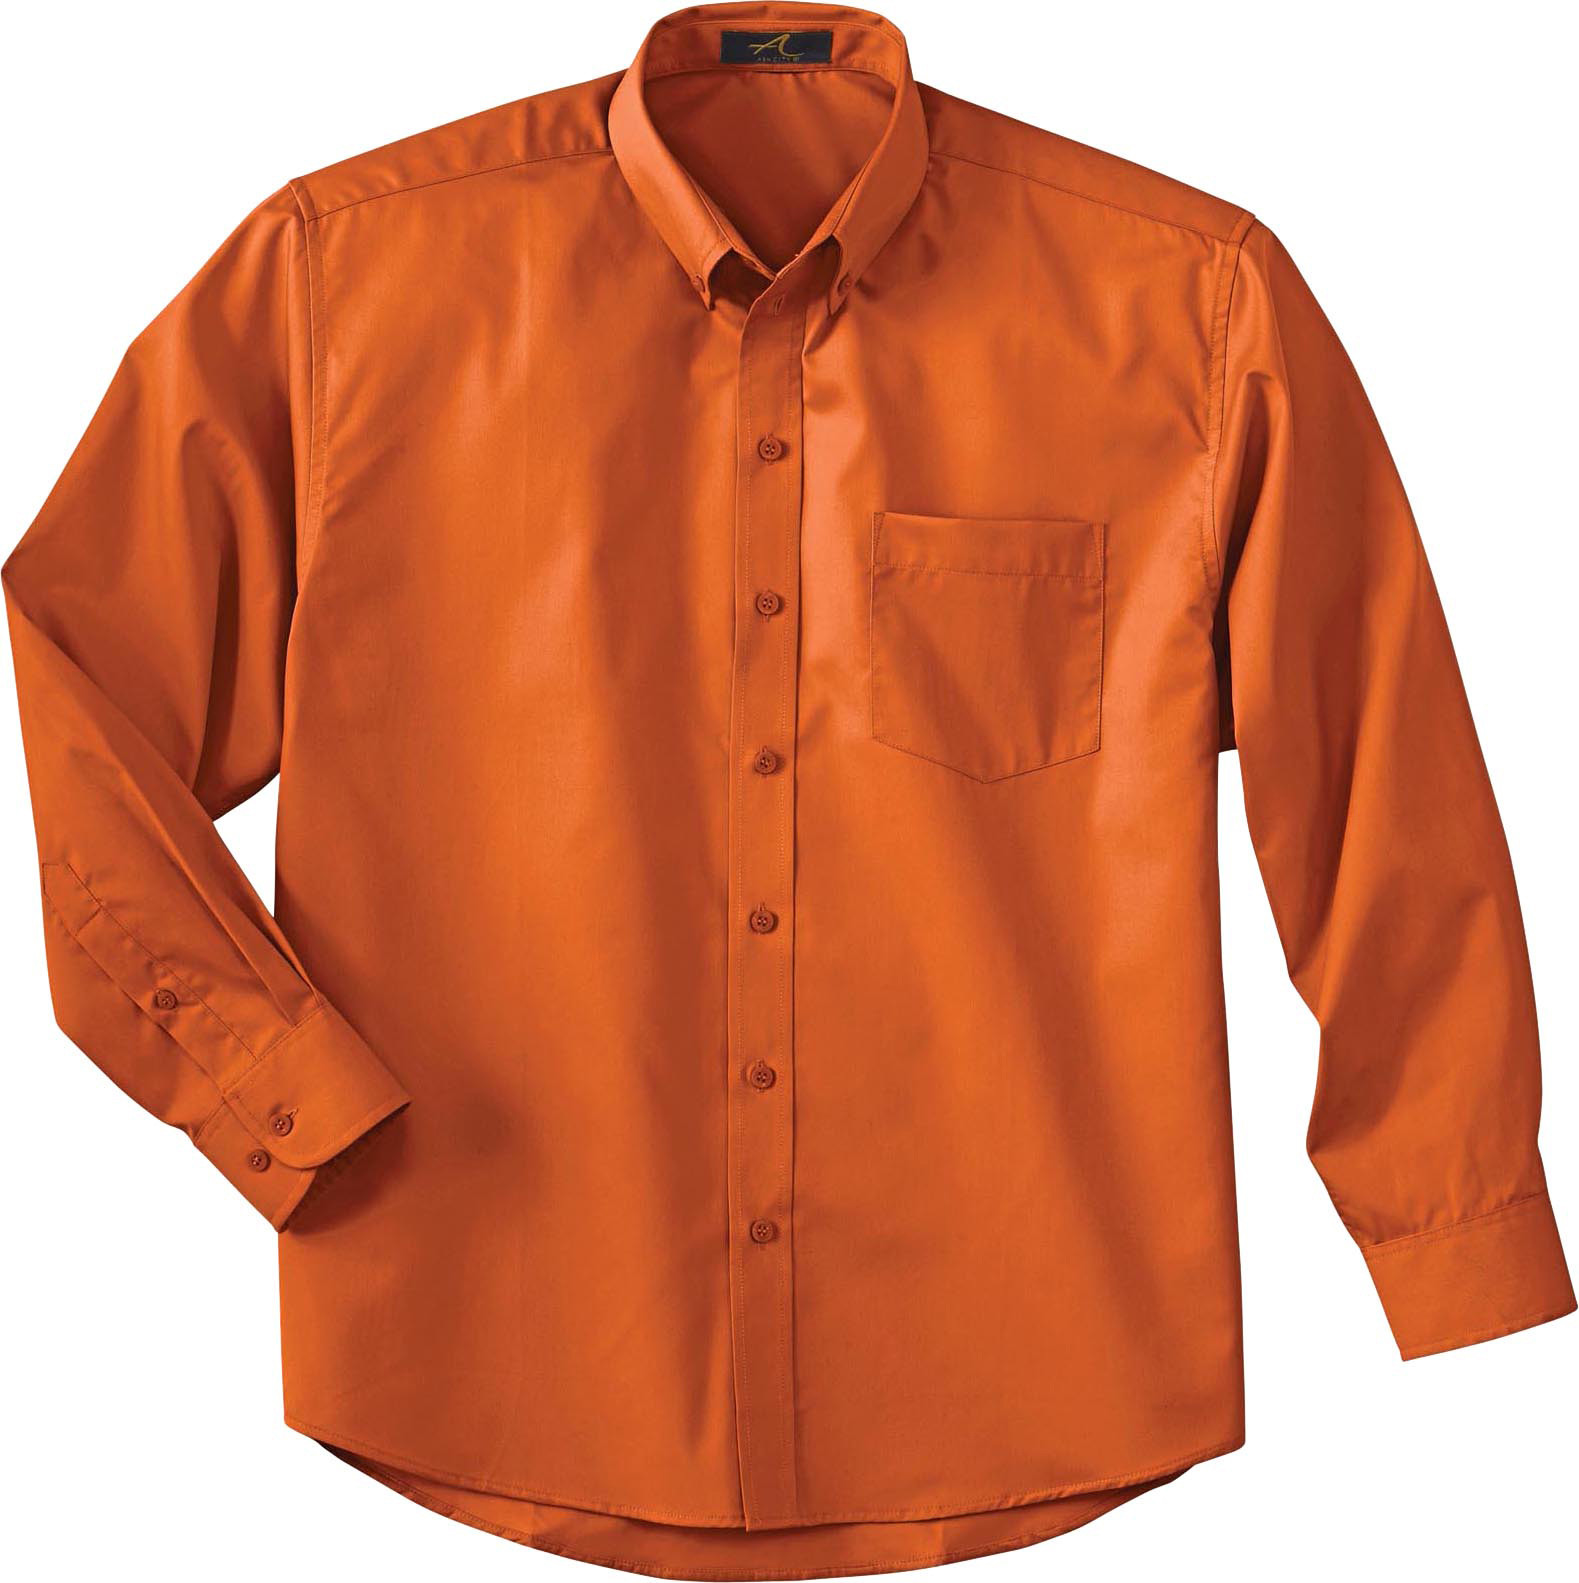 Ash City Teflon 87024 - Men's Long Sleeve Shirt With Teflon